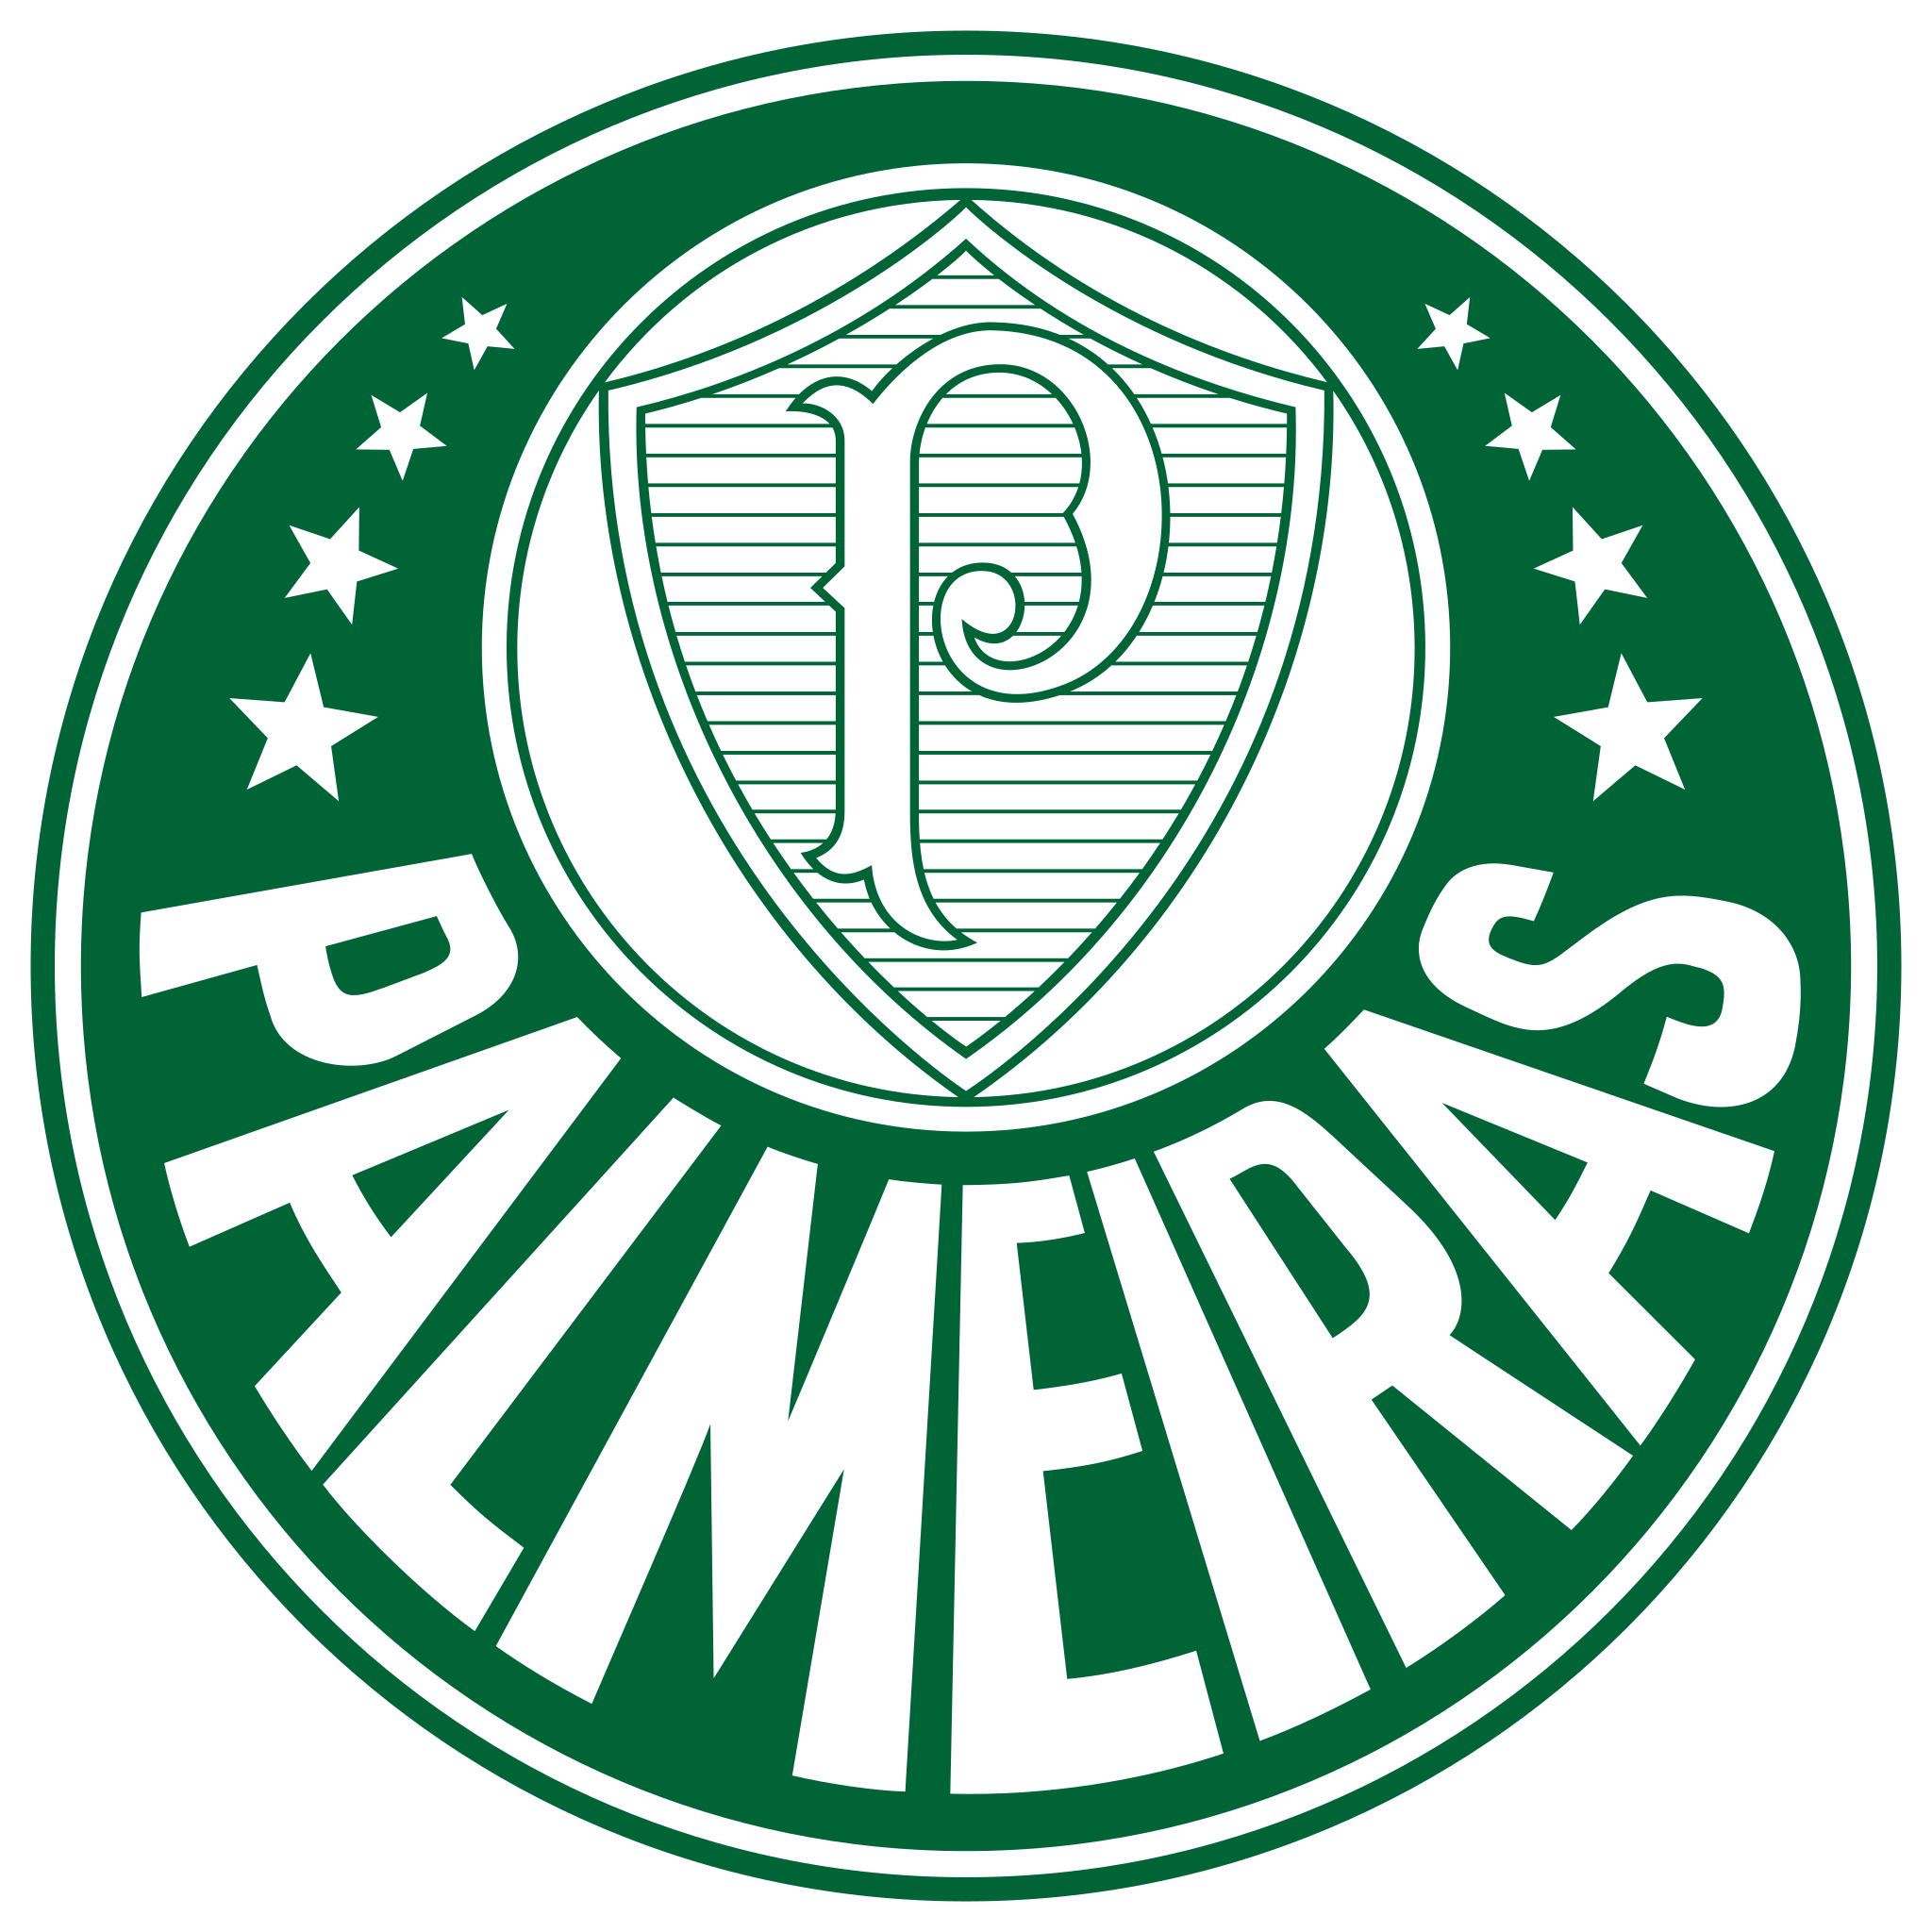 SE PALMEIRAS SP Logo